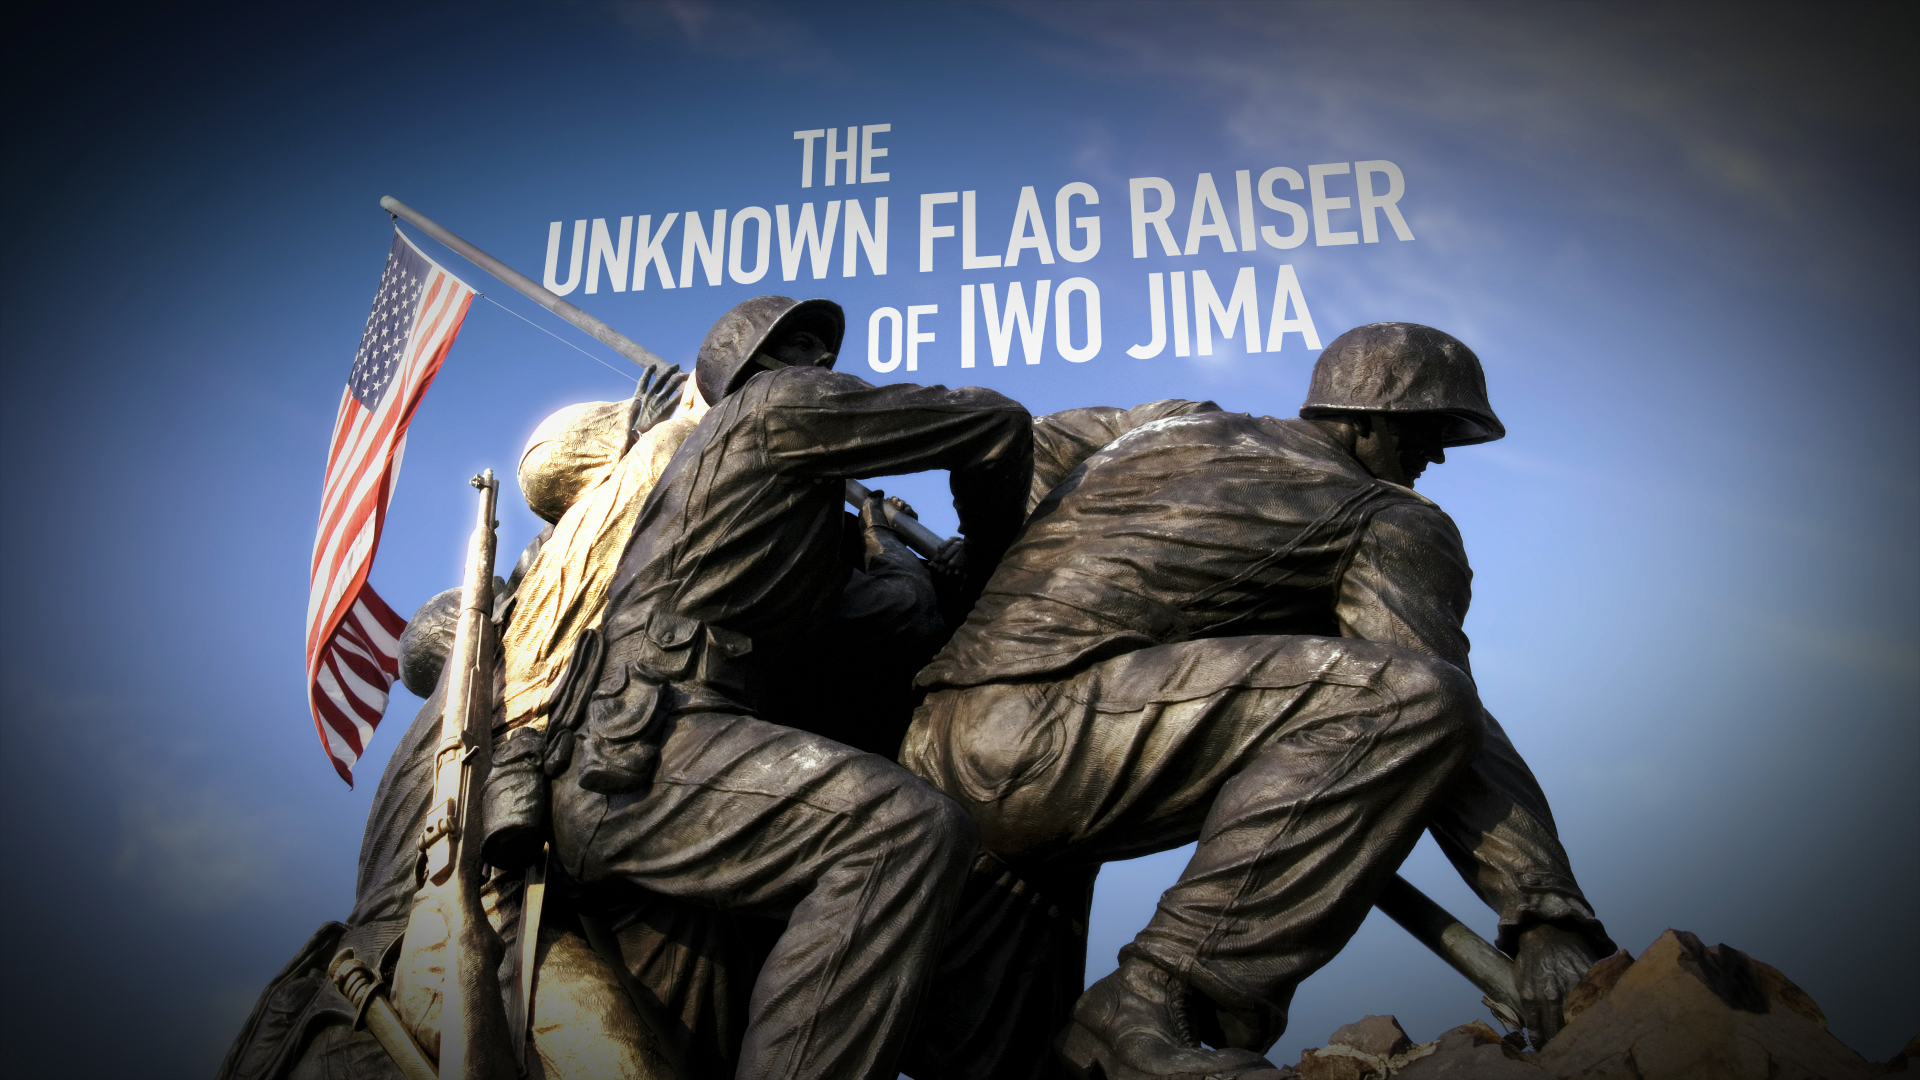 THE UNKNOWN FLAG RAISER OF IWO JIMA